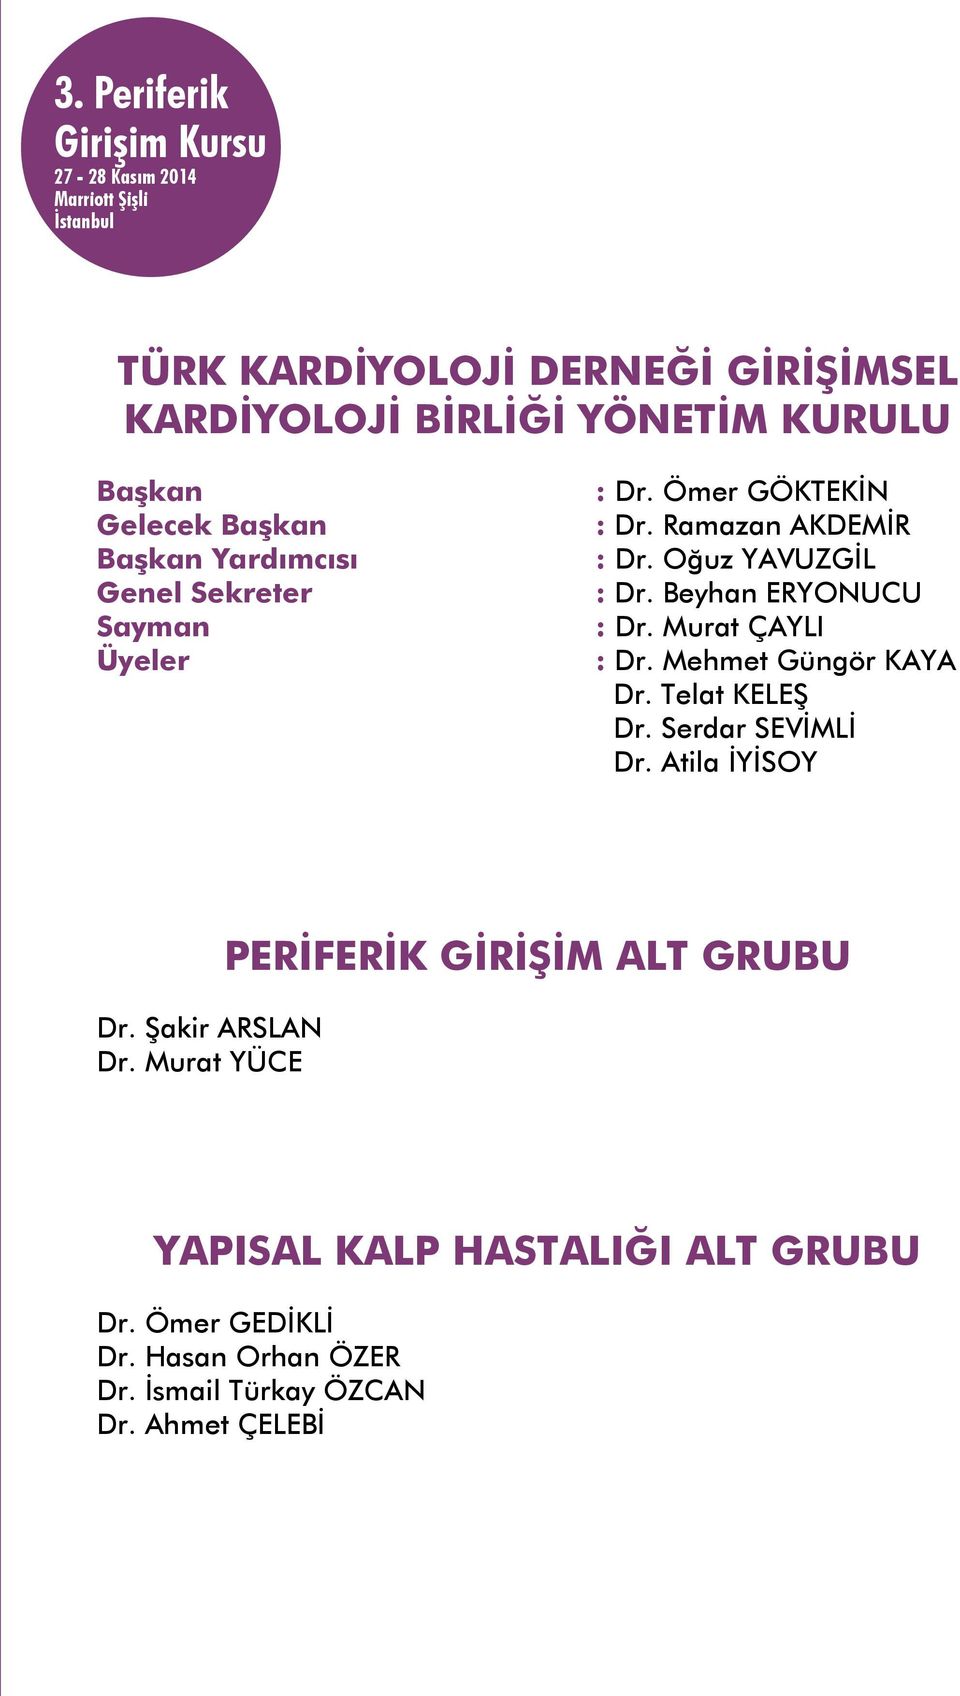 Murat ÇAYLI : Dr. Mehmet Güngör KAYA Dr. Telat KELEŞ Dr. Serdar SEVİMLİ Dr. Atila İYİSOY Dr. Şakir ARSLAN Dr.